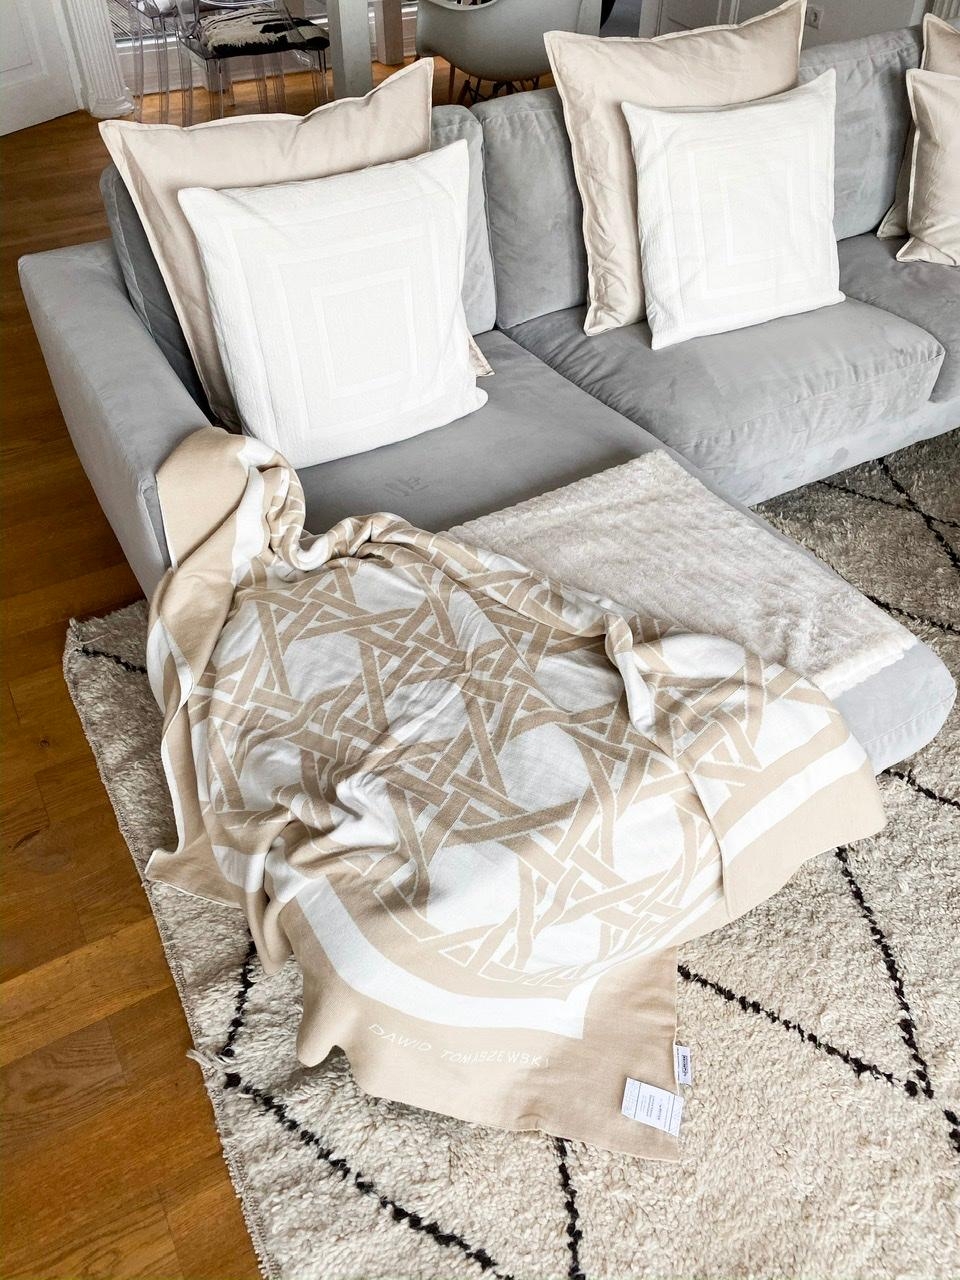 Gemütlichkeits Faktor 100
#livingroom #couch